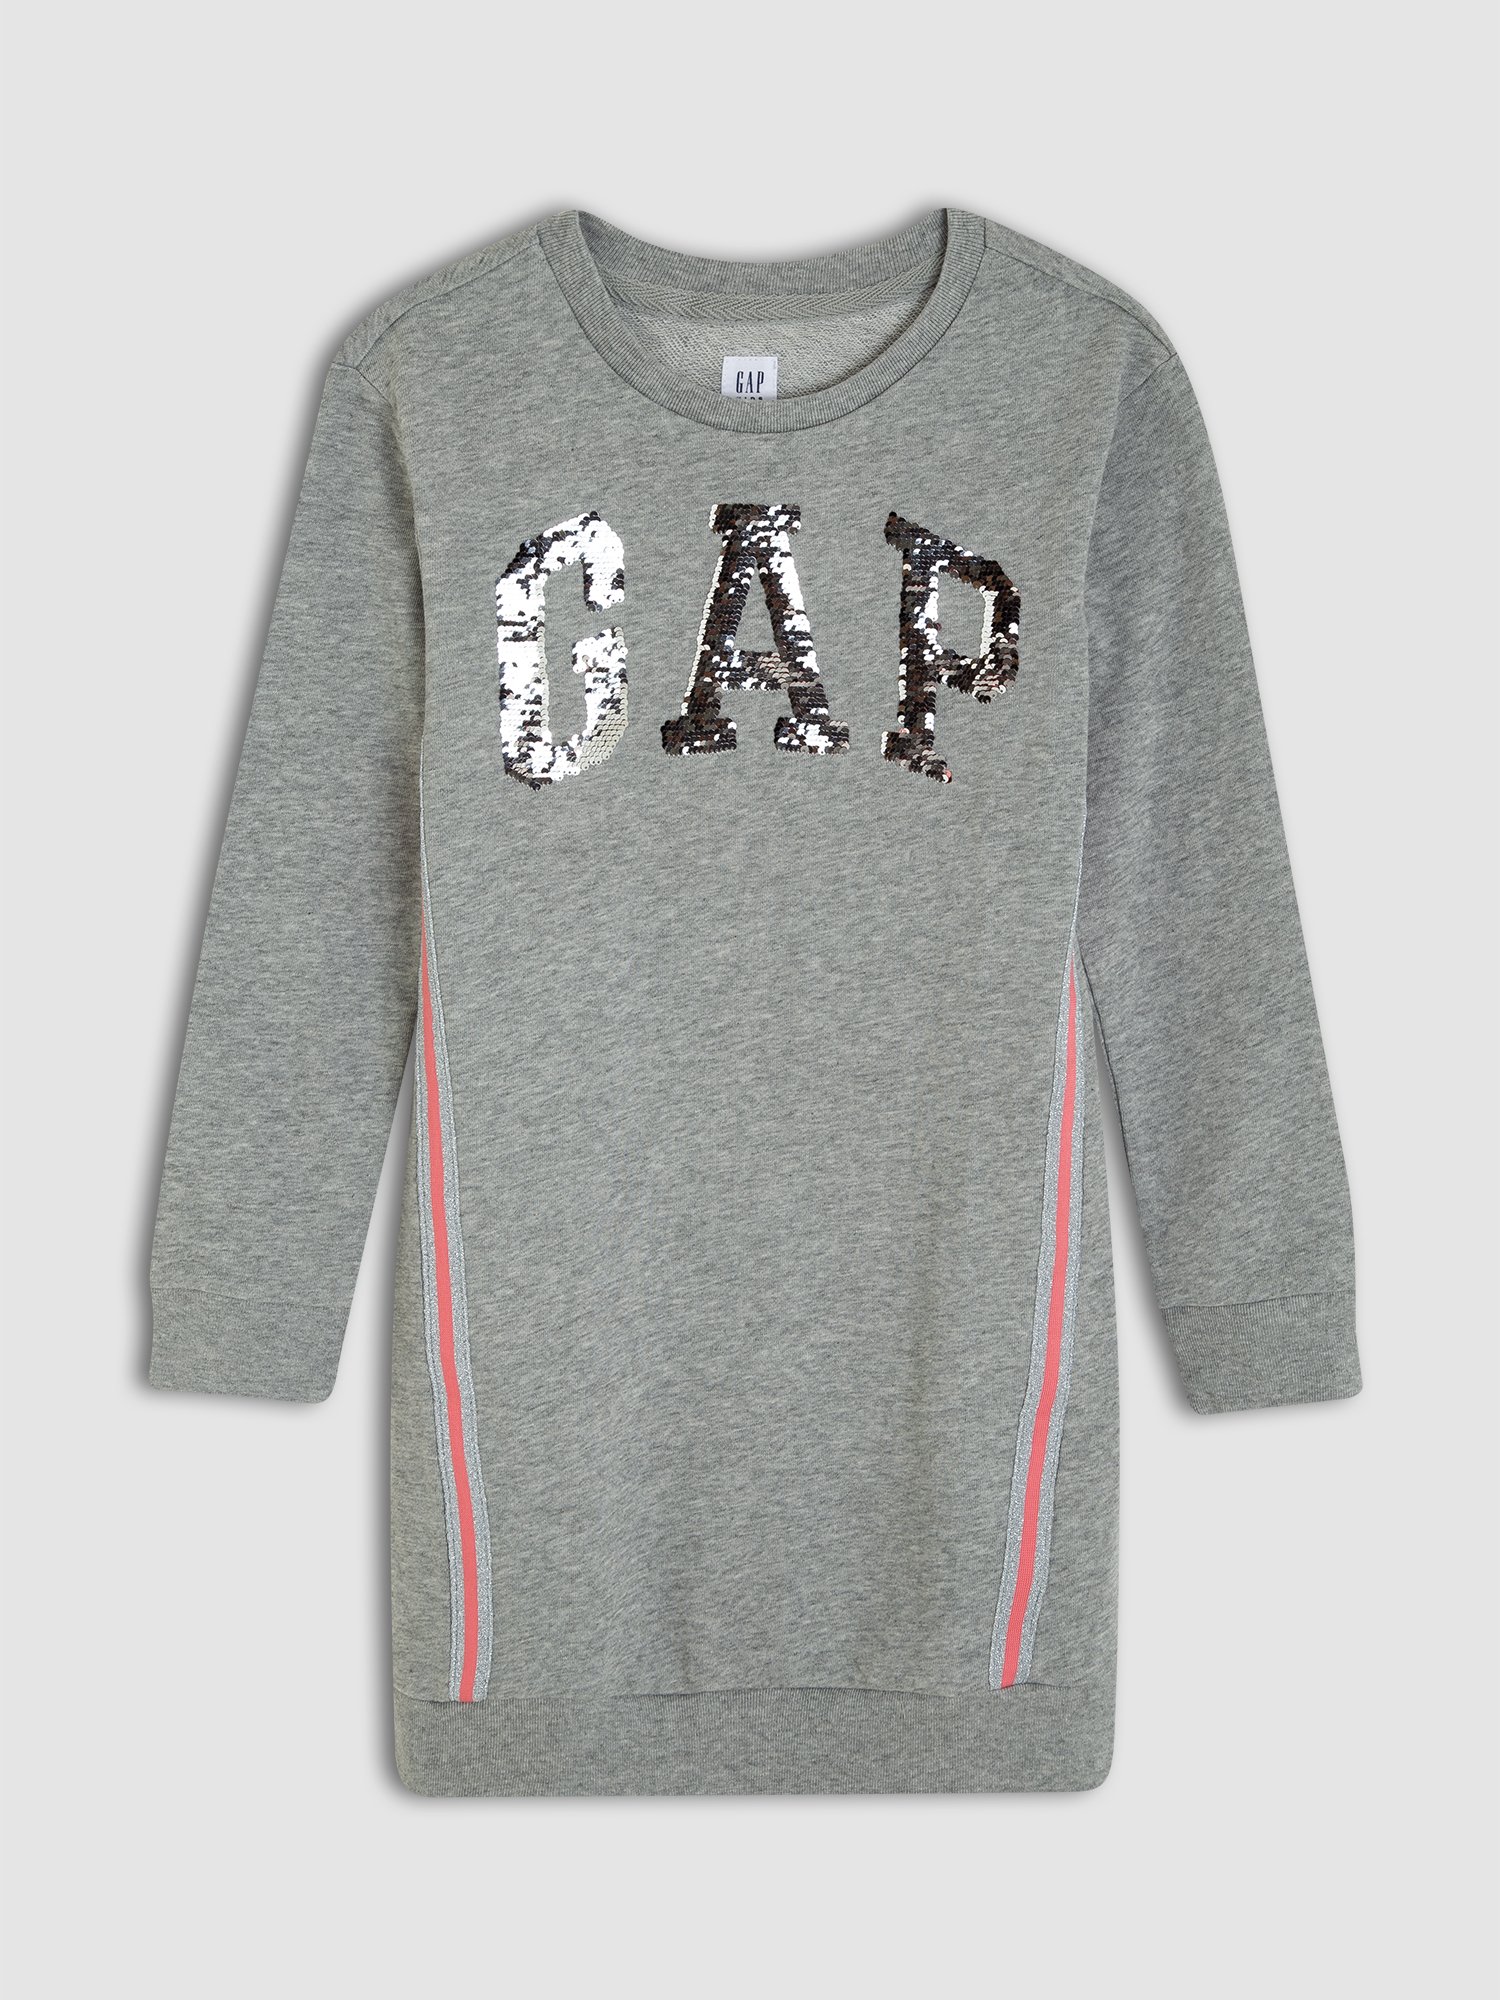 Gap Logo Sweatshirt Elbise product image